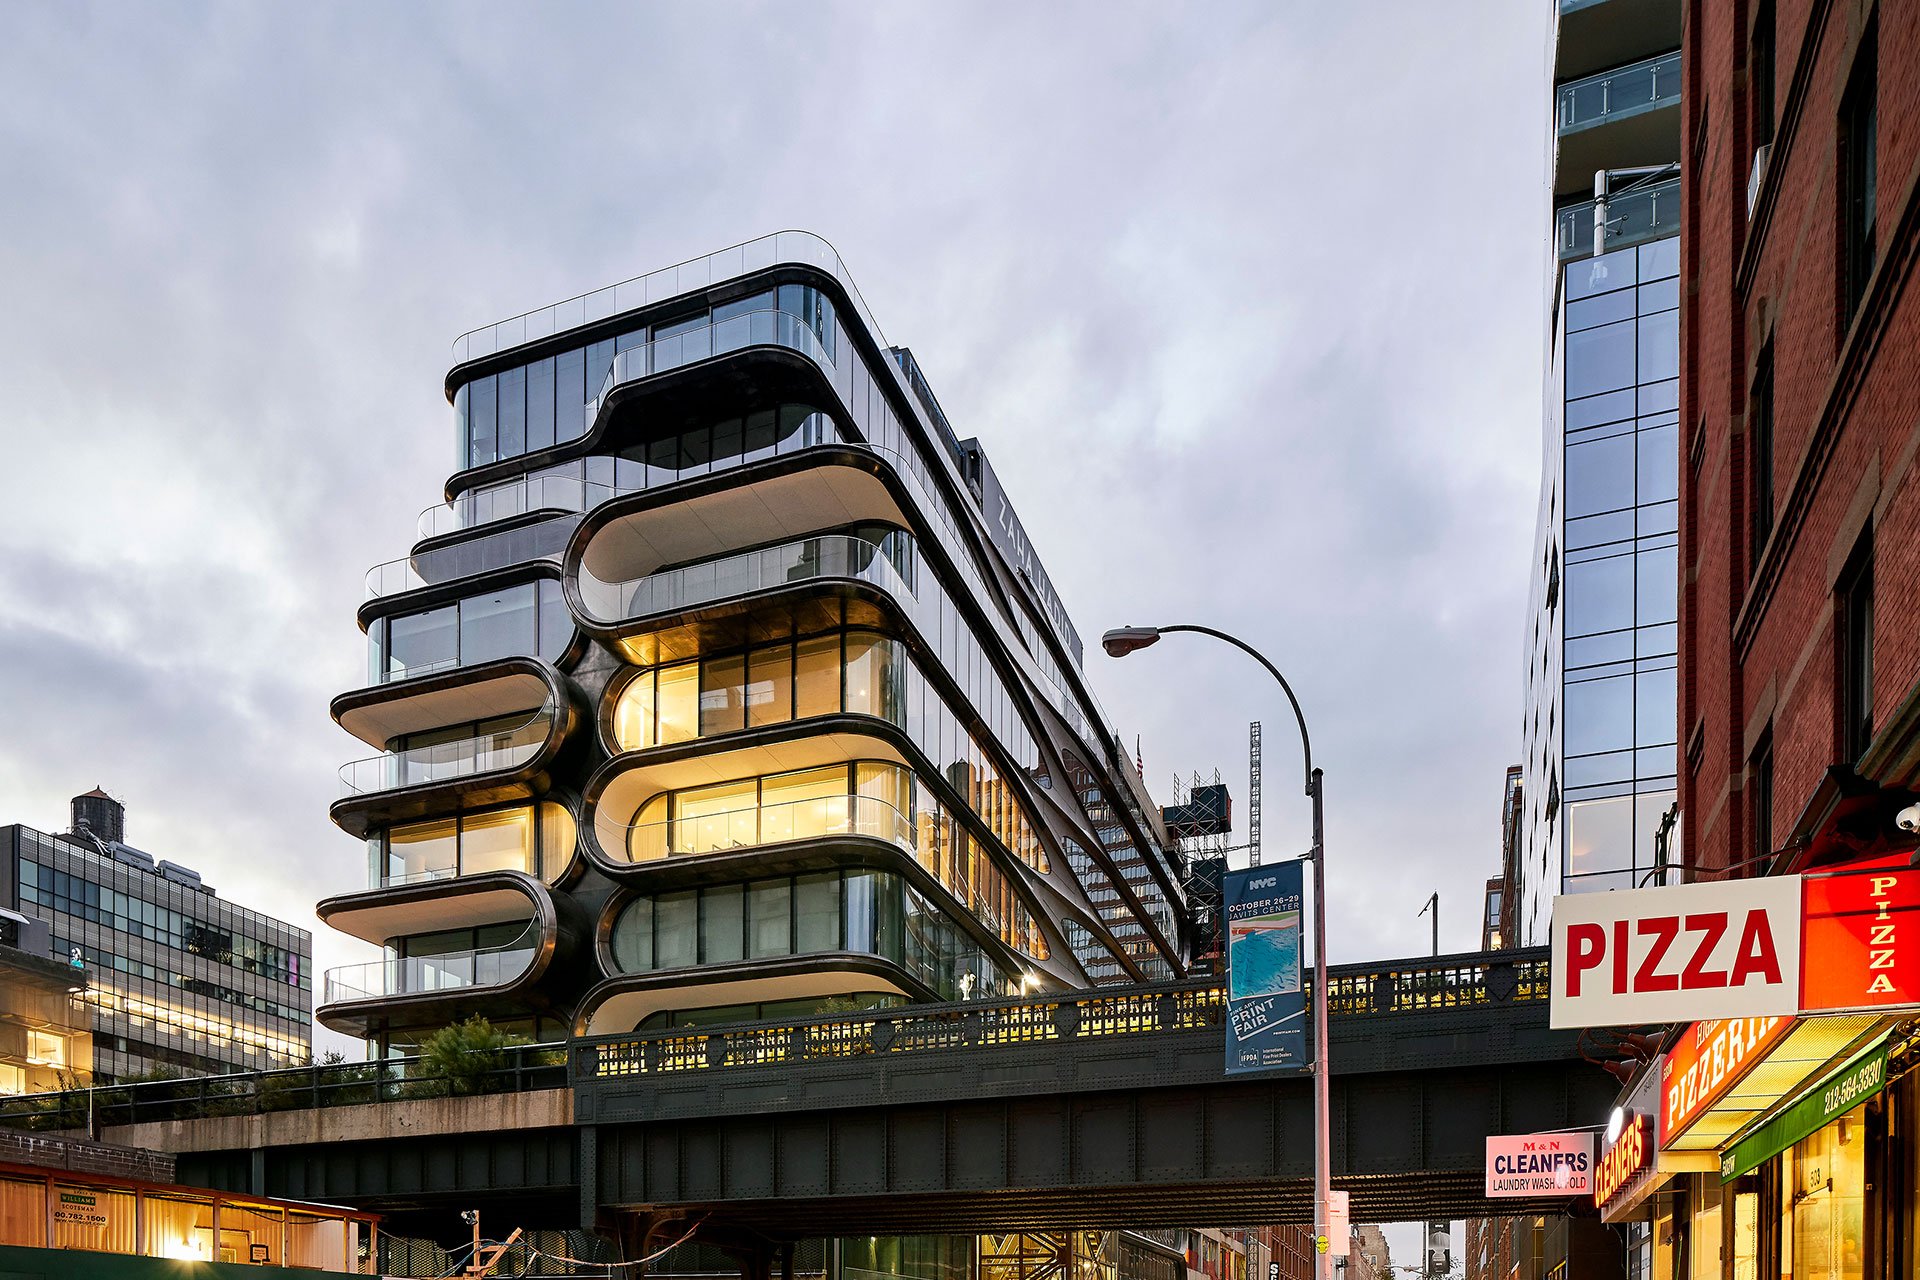 520 West 28th Street New York, New York / USA Architects: Zaha Hadid Developer: Related OVI architectural lighting design